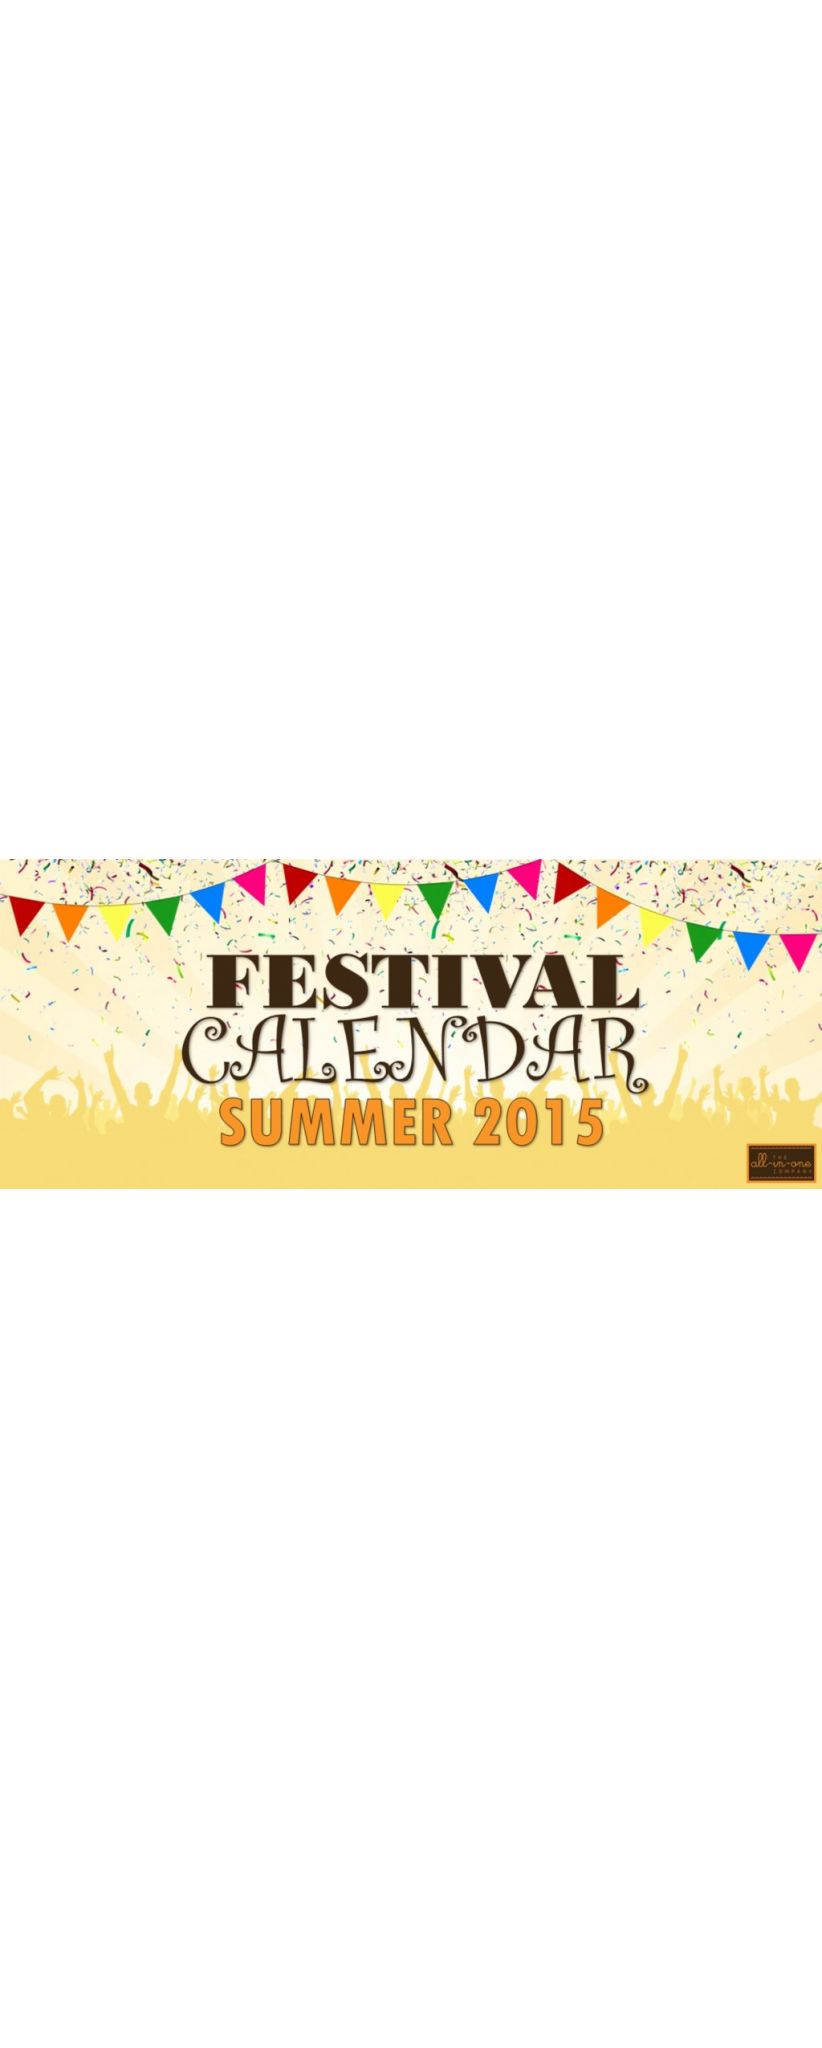 Onesie Festival Calendar - Summer 2015